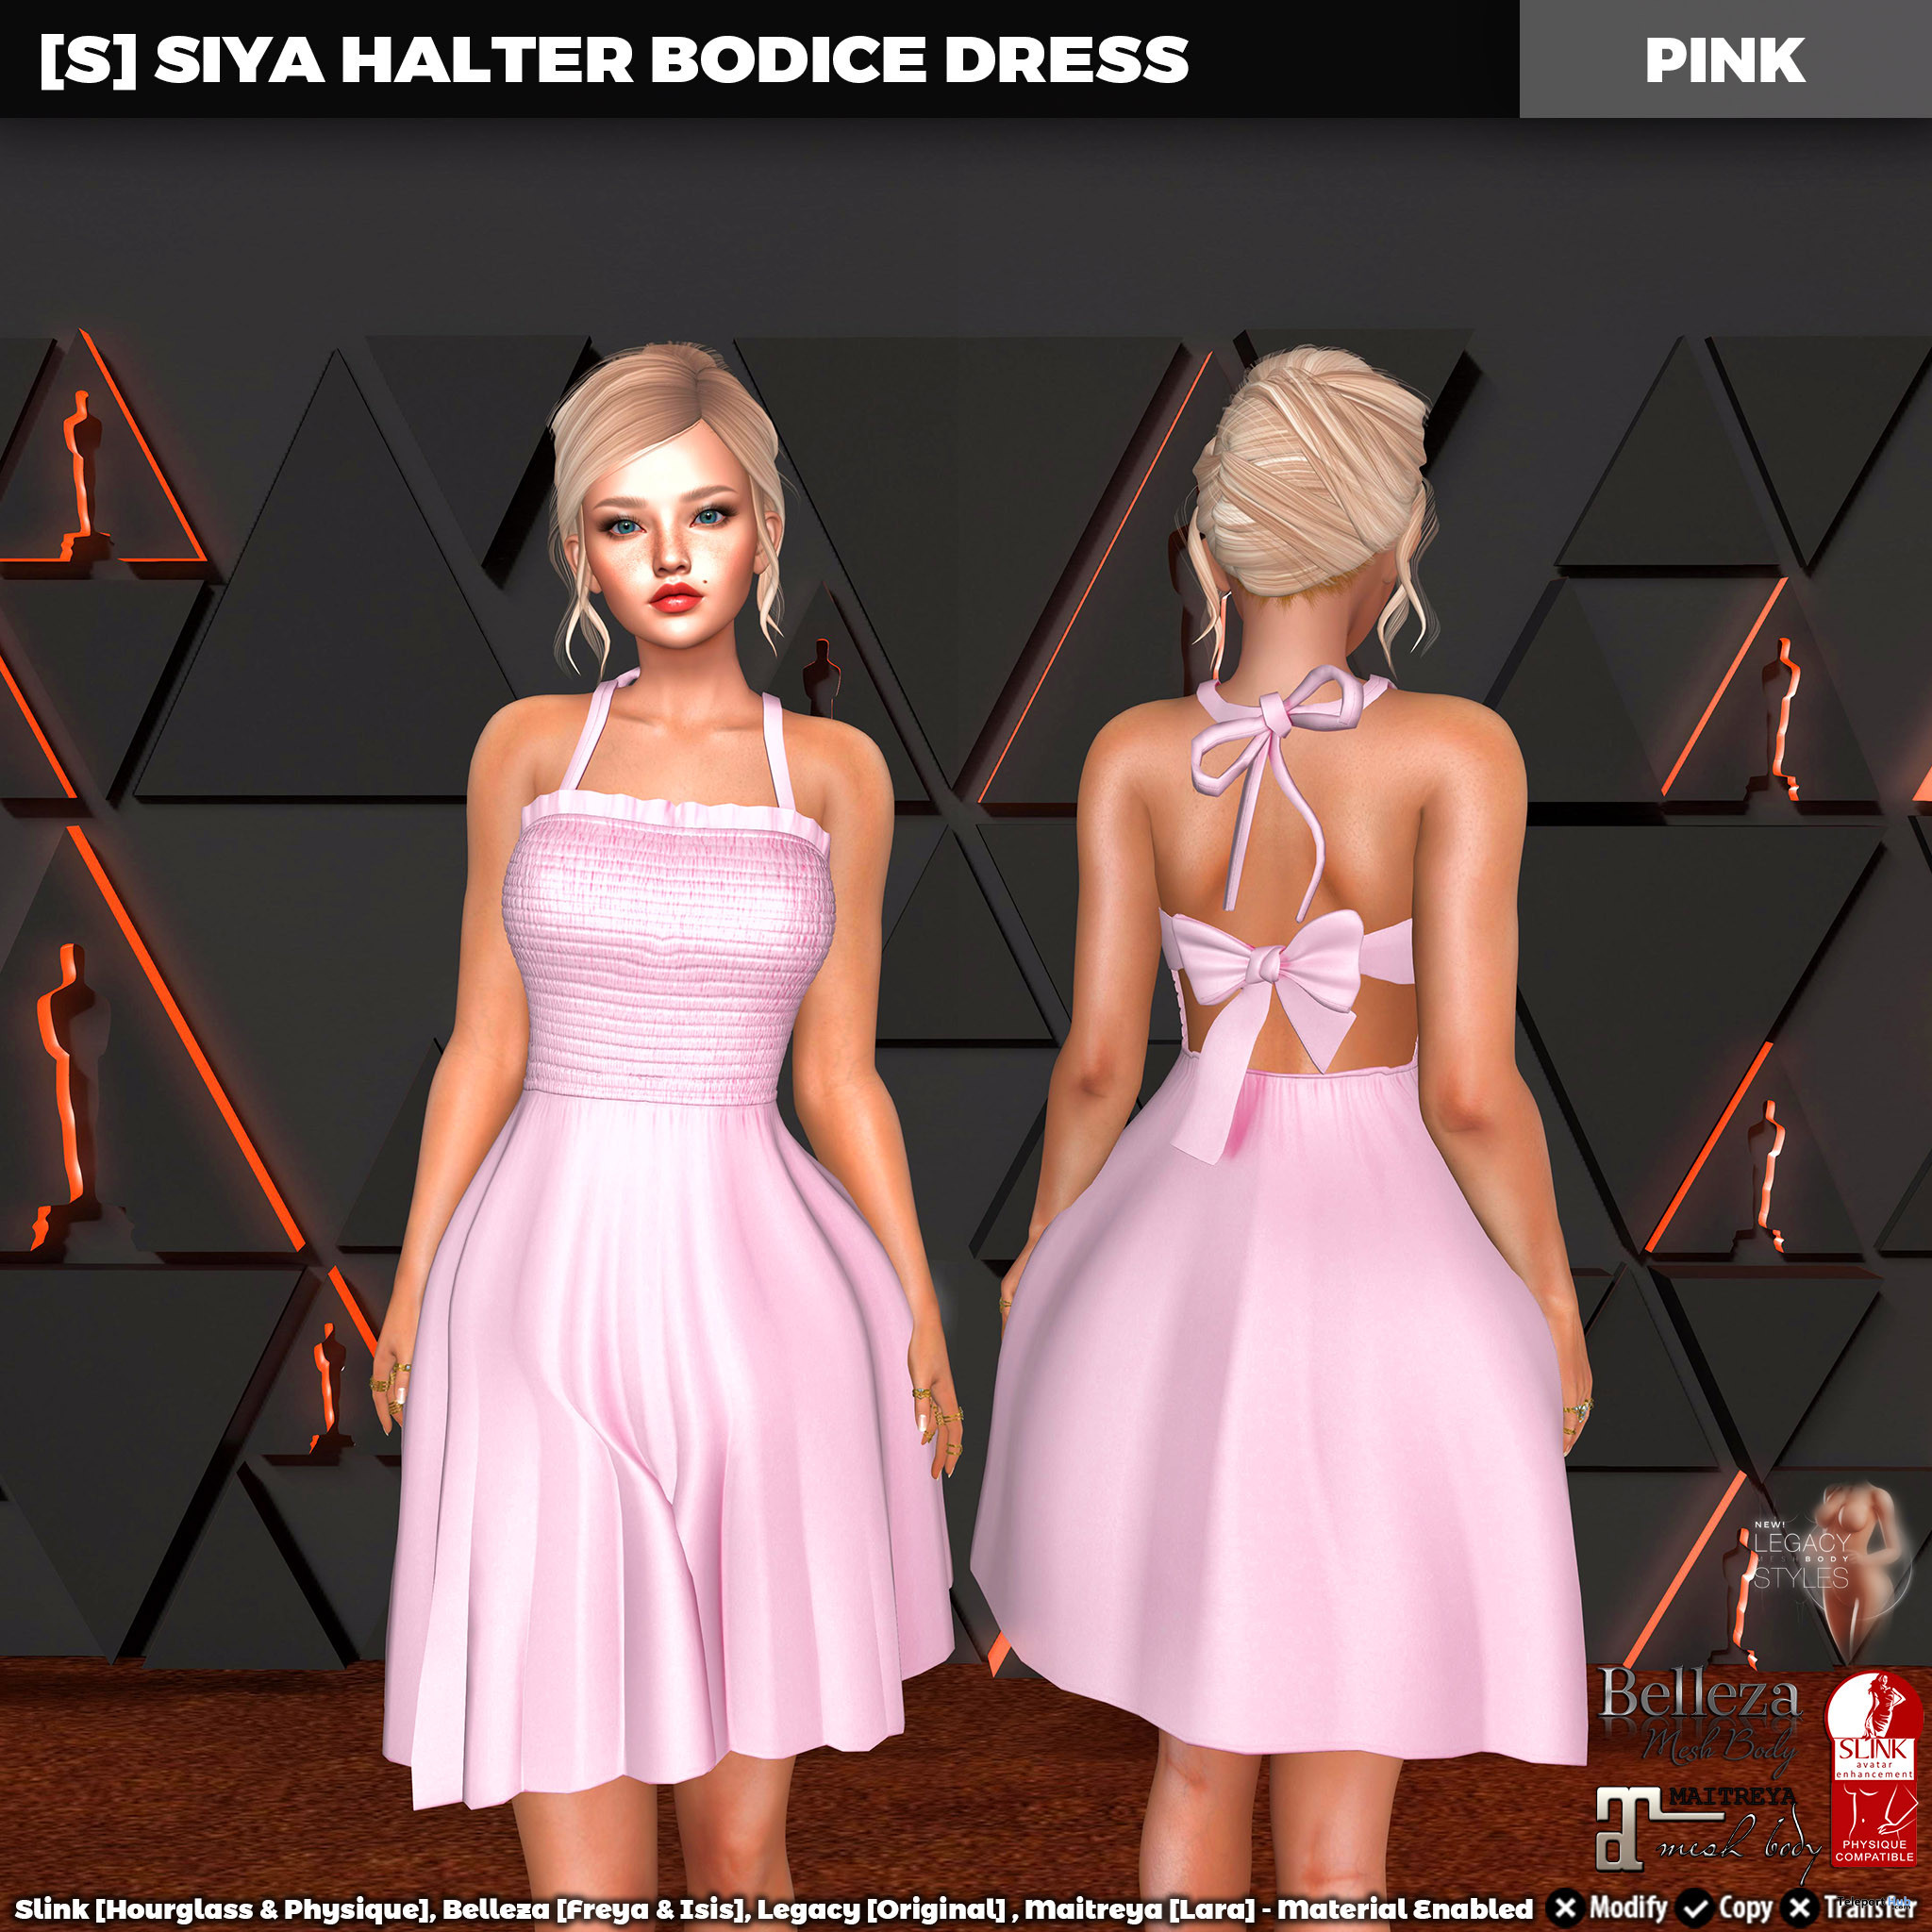 New Release: [S] Siya Halter Bodice Dress by [satus Inc] - Teleport Hub - teleporthub.com